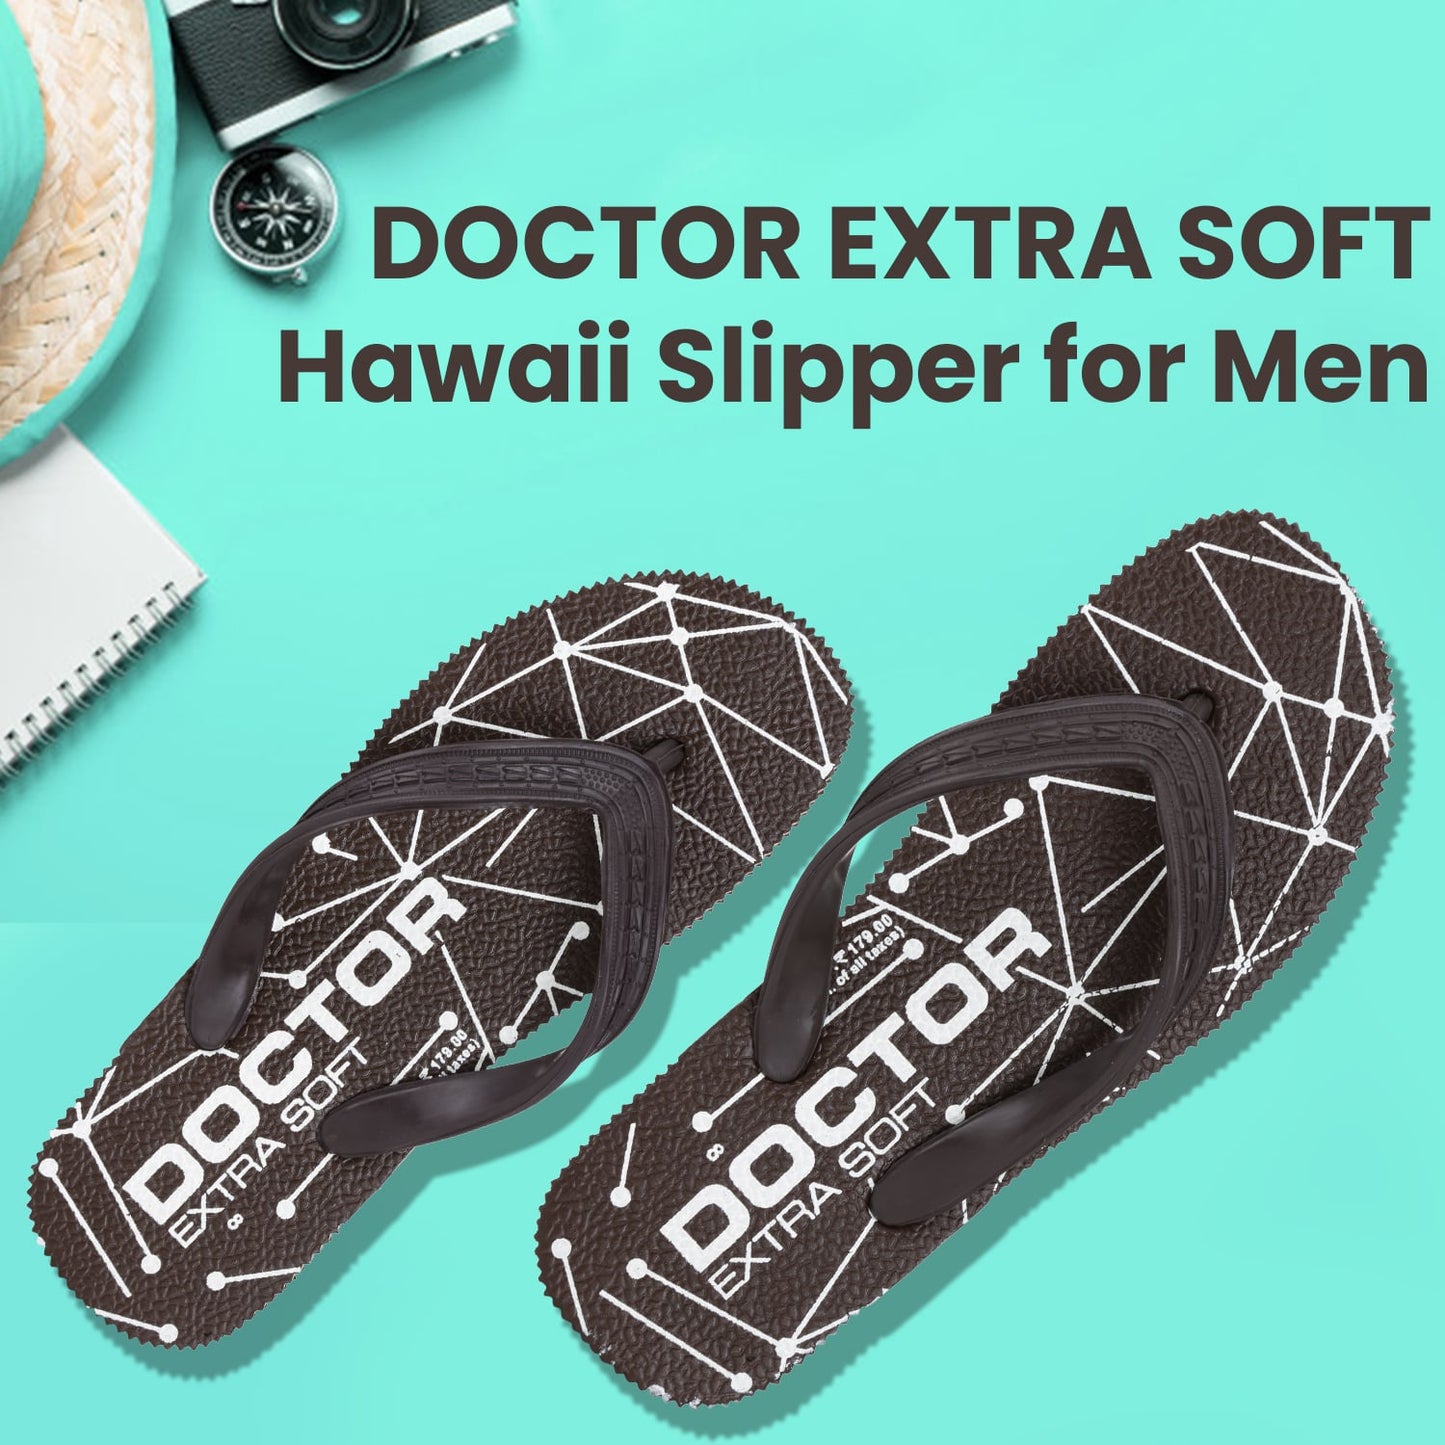 DOCTOR EXTRA SOFT D-01 Men's Hawaii Slipper Orthopaedic and Diabetic Comfort Ortho Care, Bathroom Rubber Flip-Flops & House Slipper for Gent’s & Boy’s